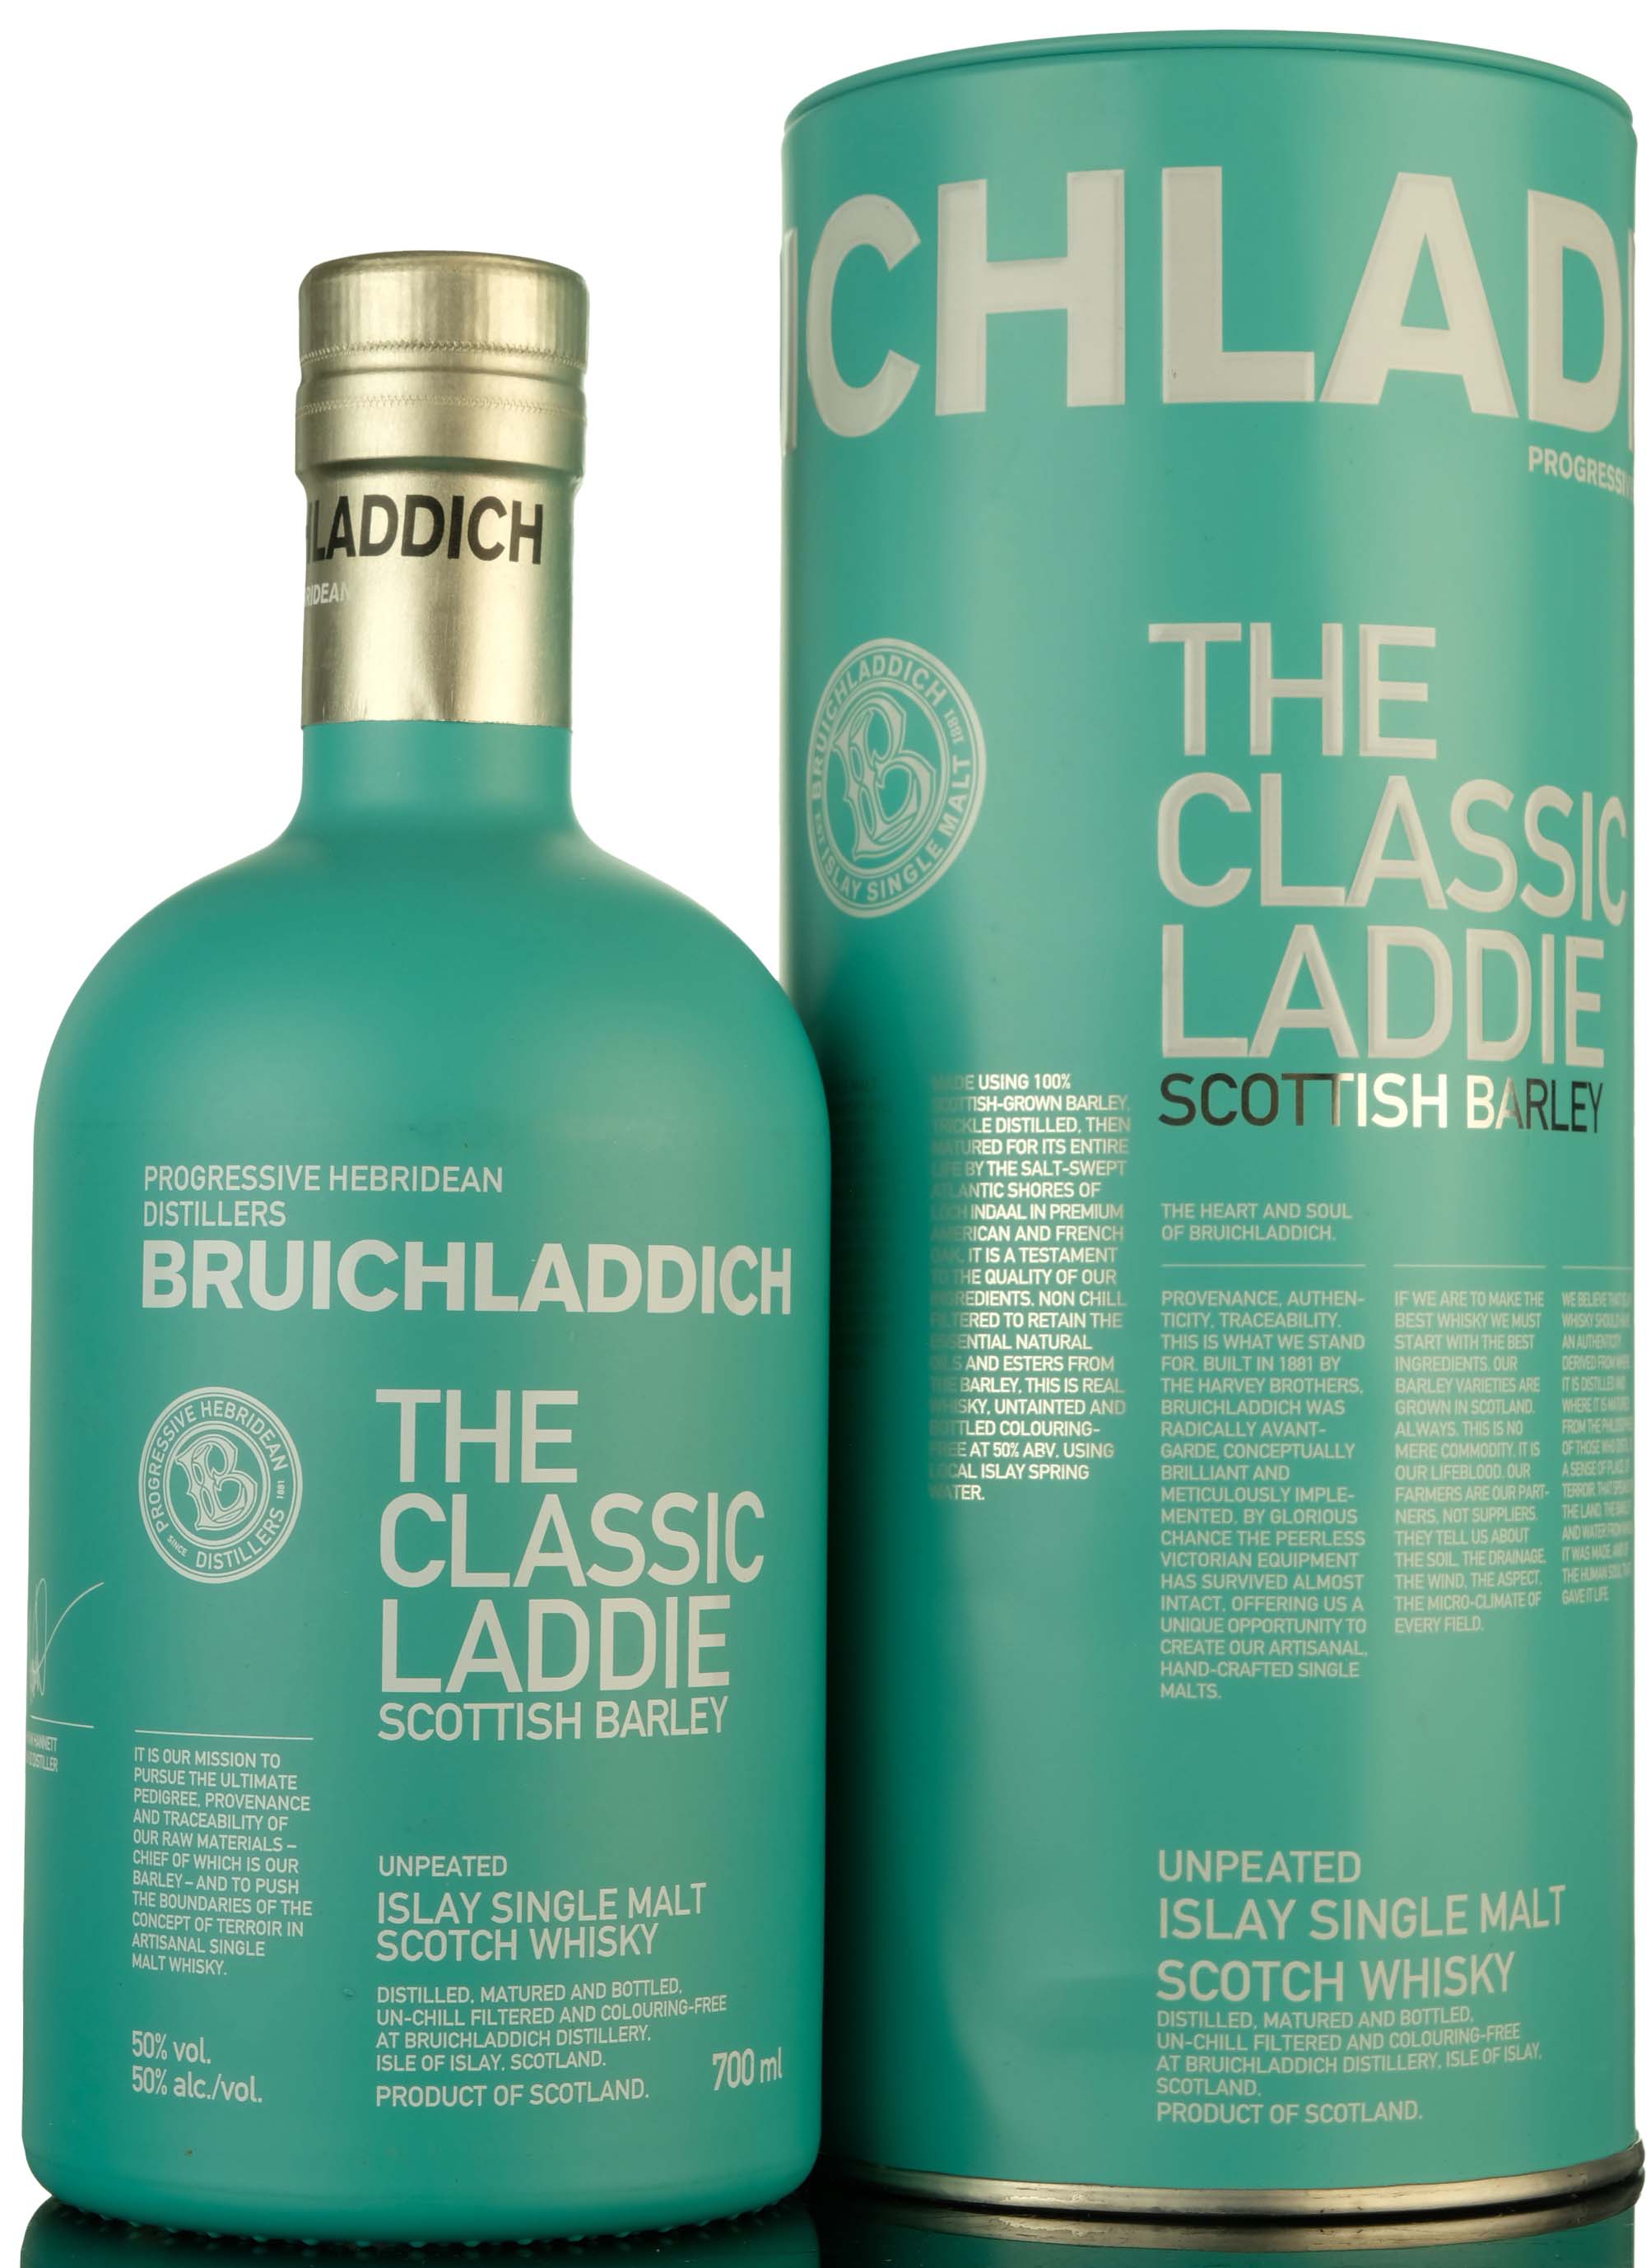 Bruichladdich The Laddie Classic Scottish Barley